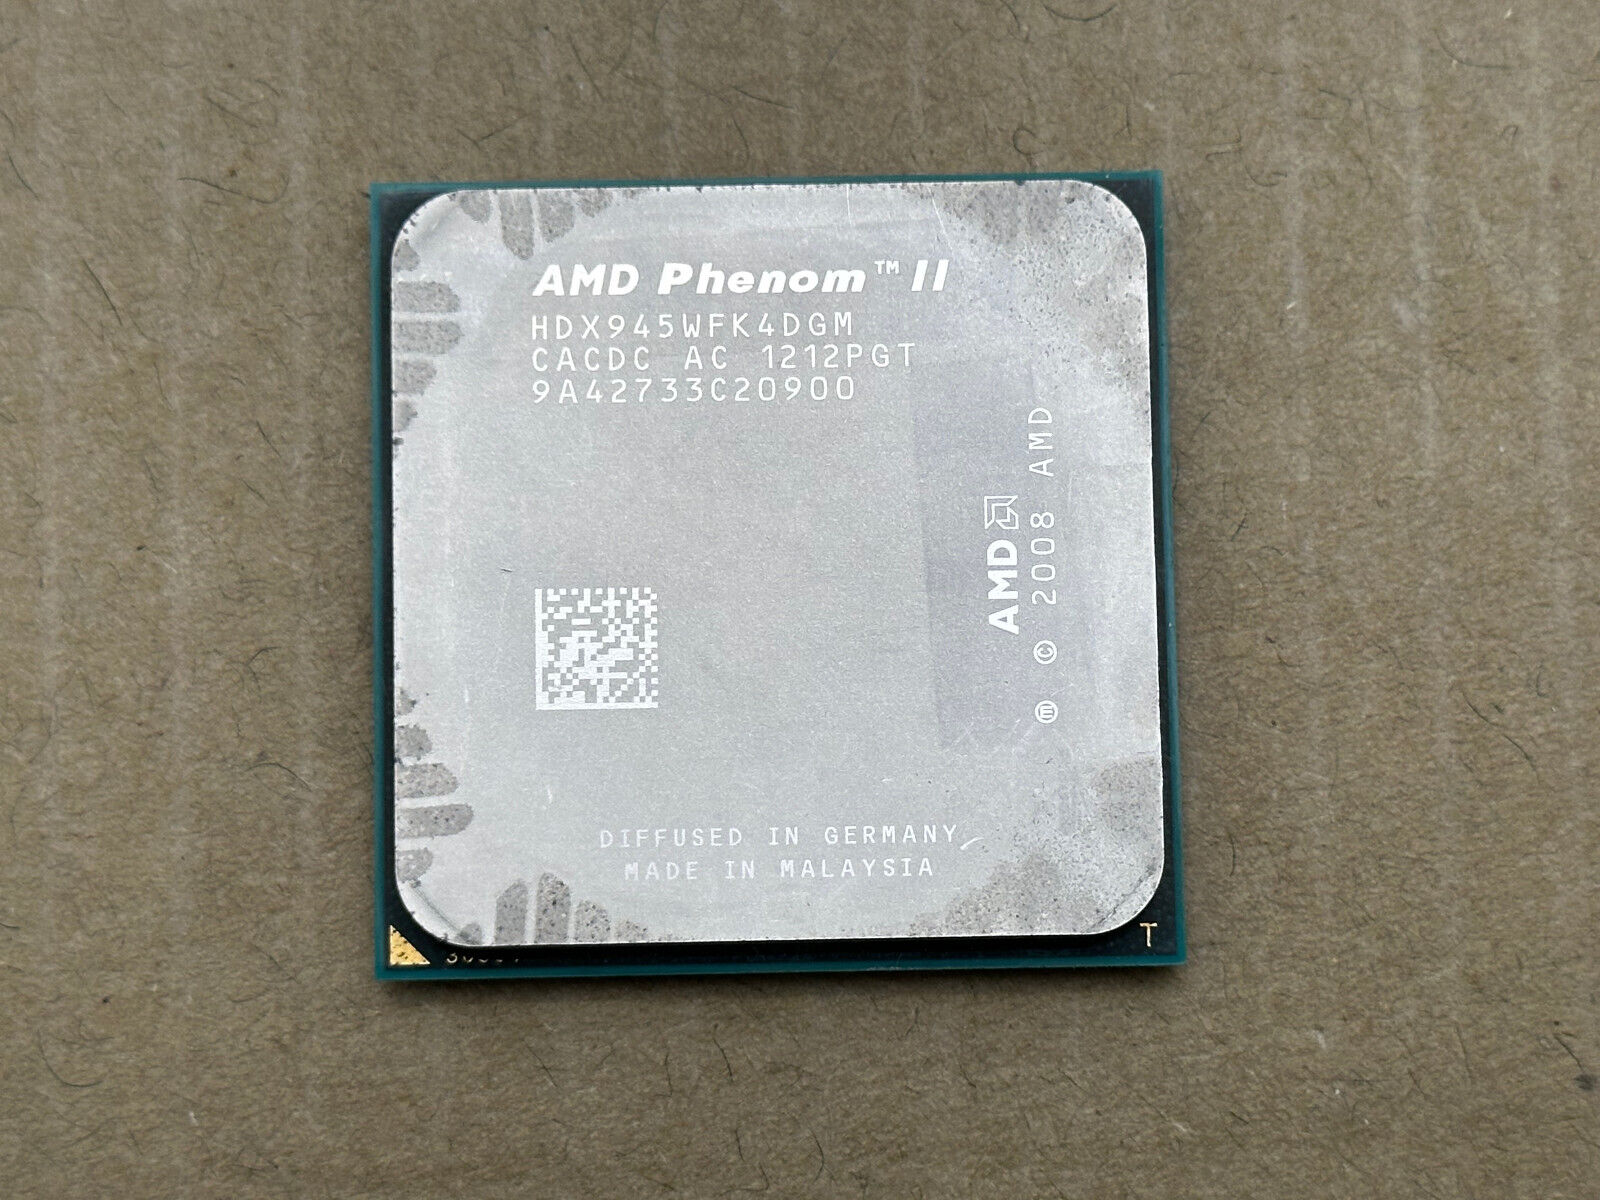 AMD Phenom II X4-945 3.0GHZ Socket AM3 HDX945WFK4DGM CPU Processor